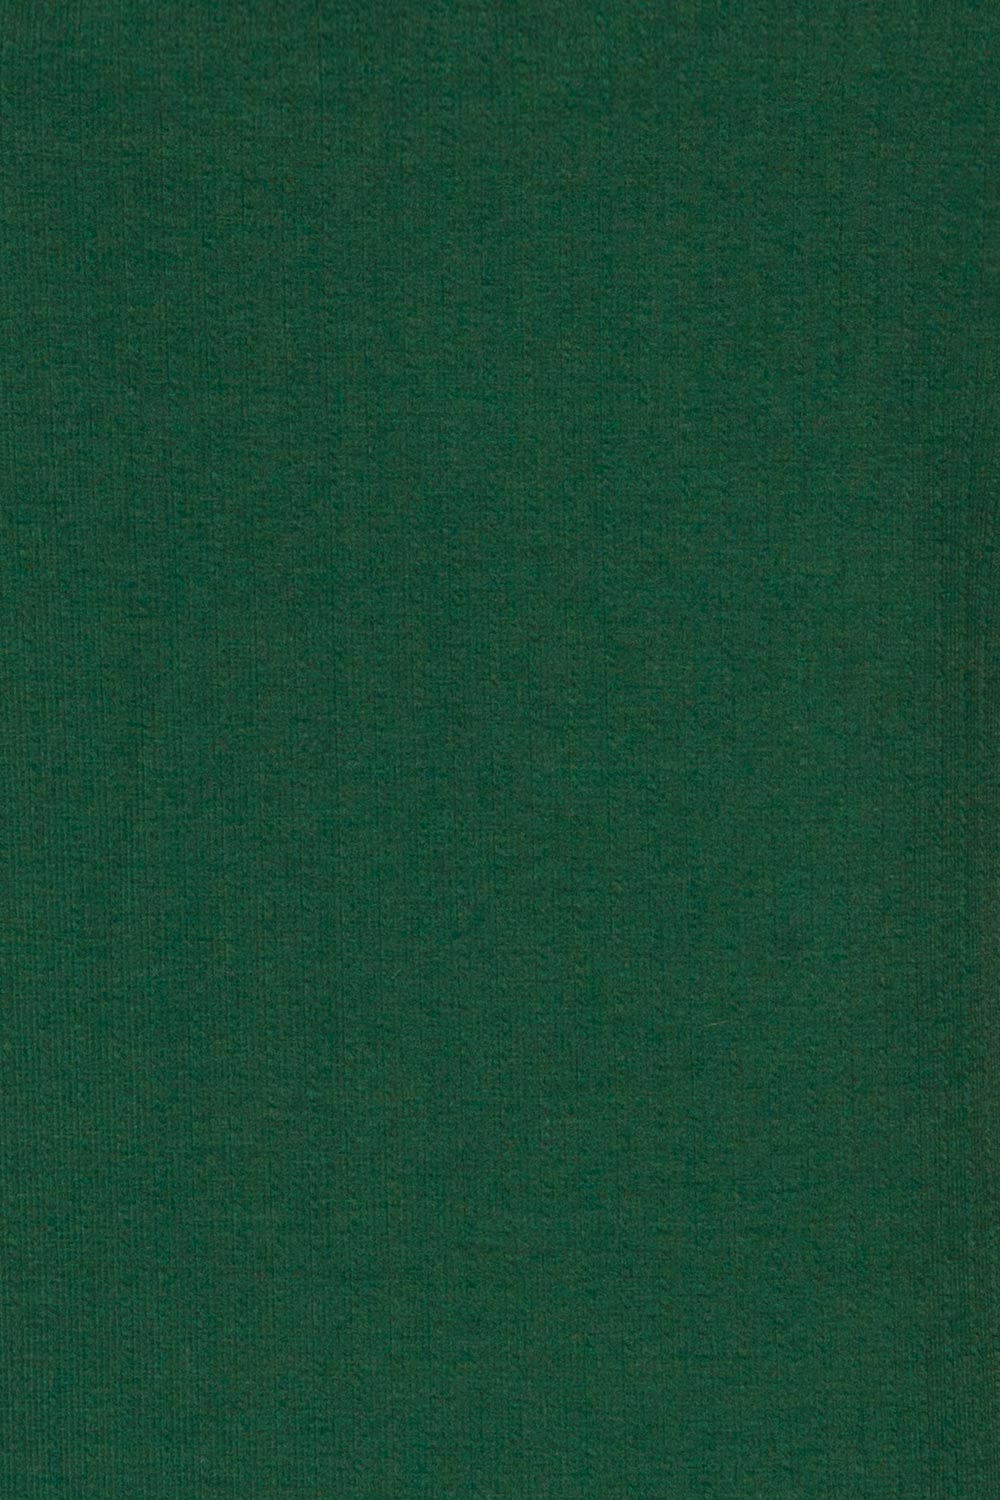 Fallebo Seaweed Green Short Sleeved T-Shirt detail fabric | La Petite Garçonne